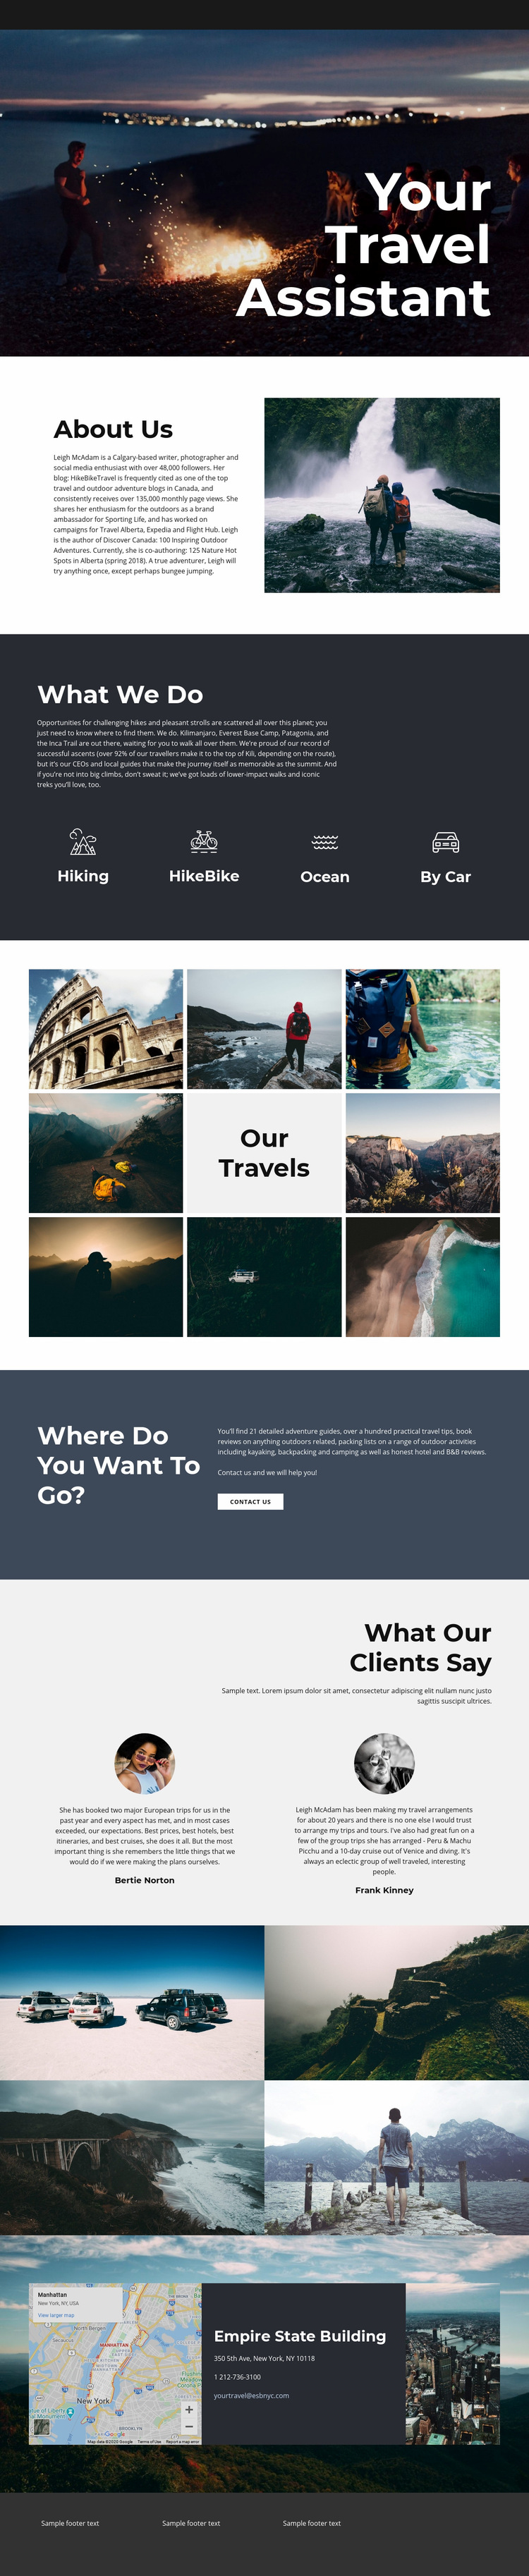 Travel Assistant Web Page Design